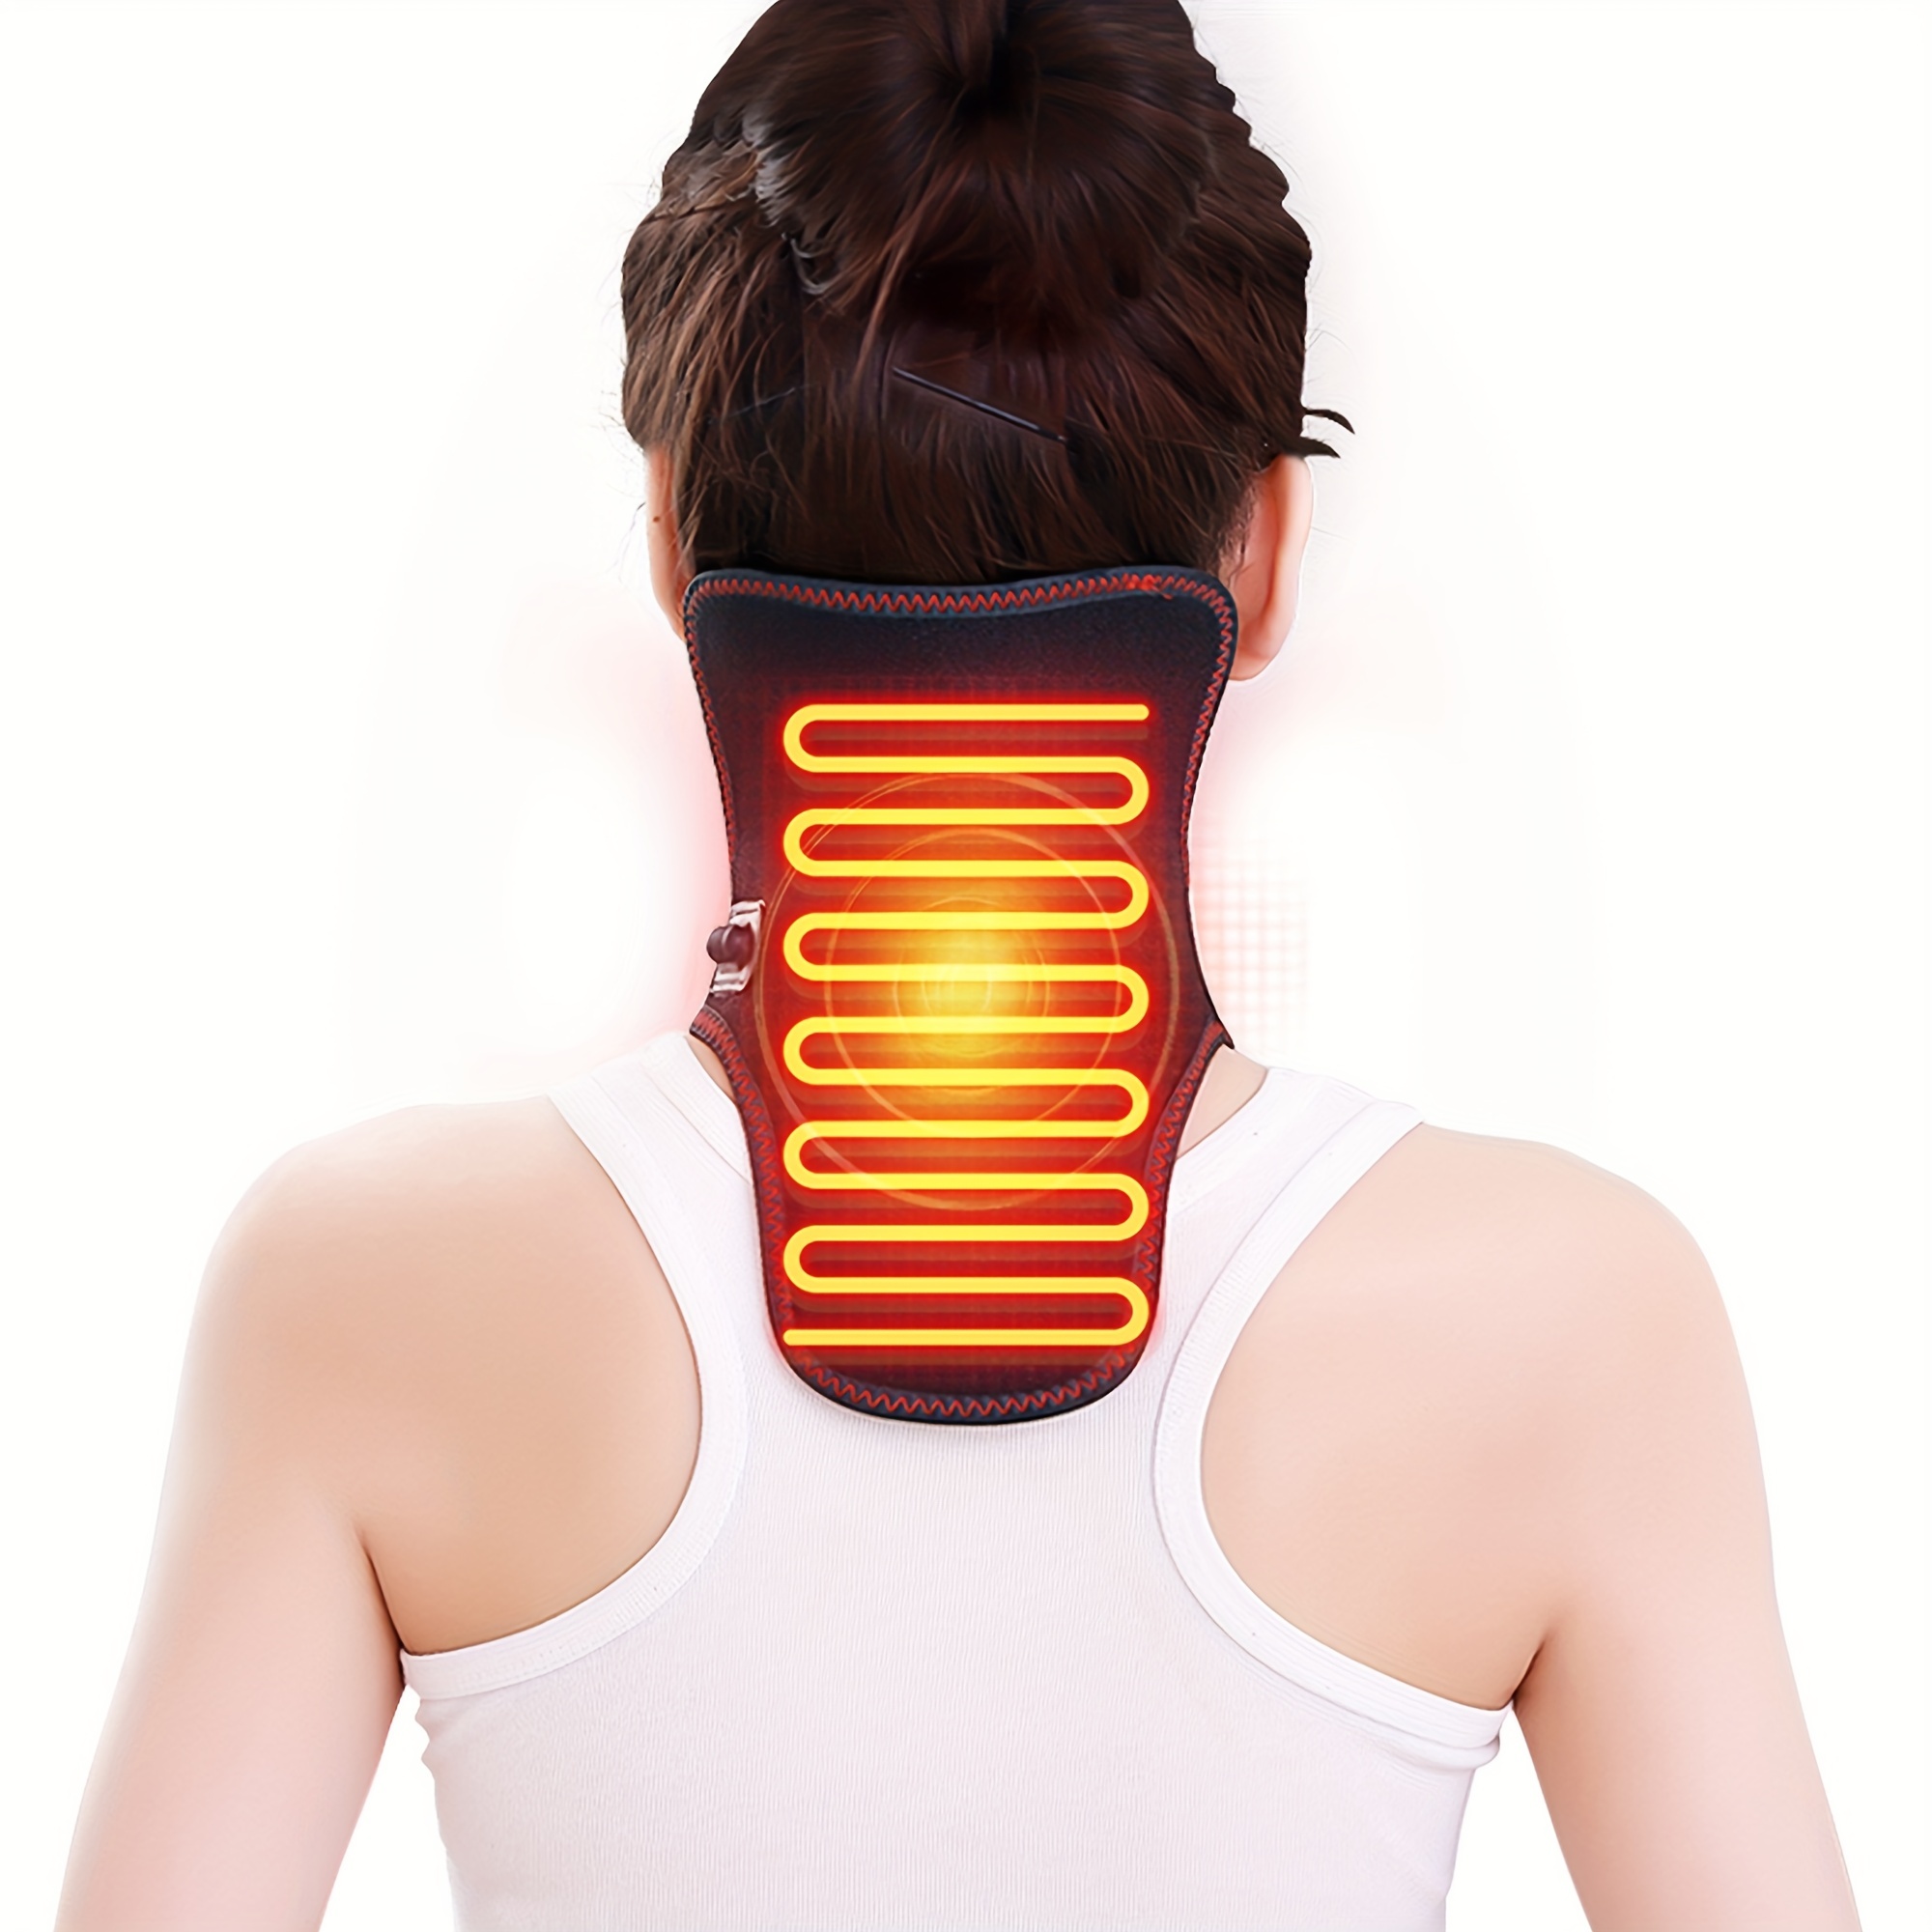 Sojoy Vibration Back Massager with Heat-Massage Heat Seat Cushion